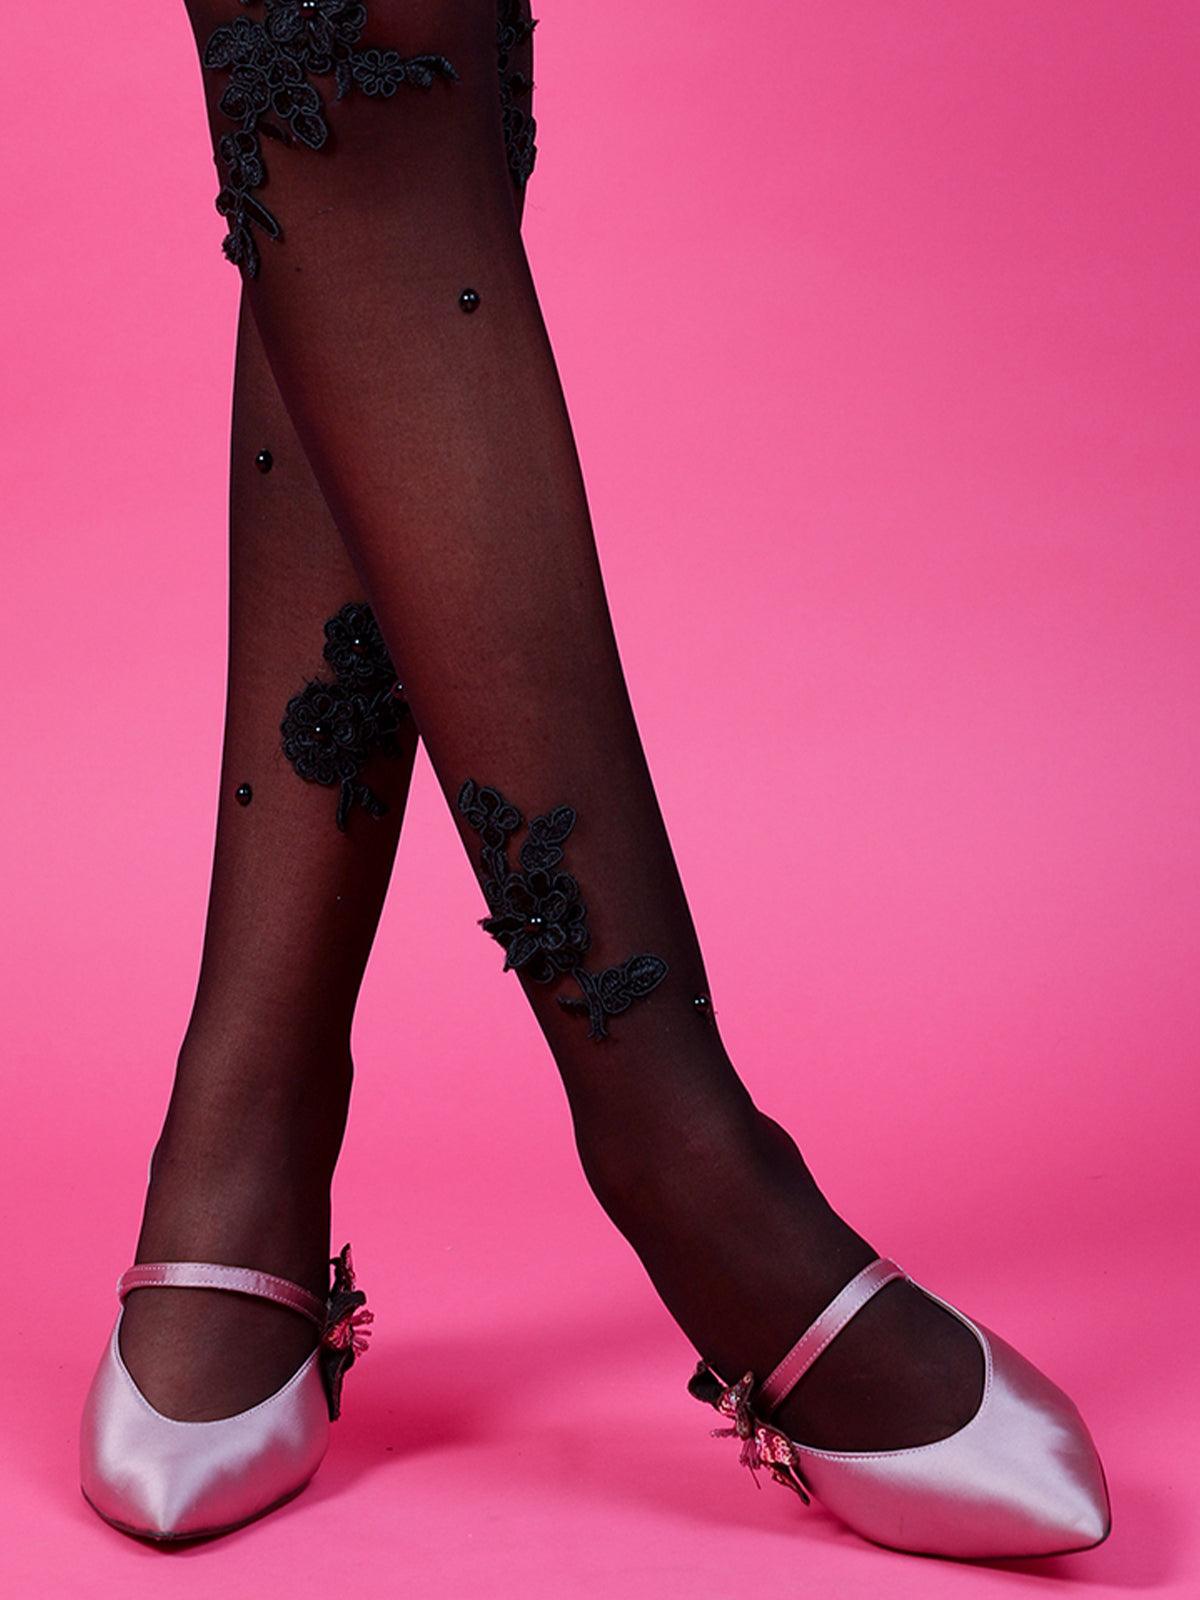 Alluring black floral stockings for women - Odette